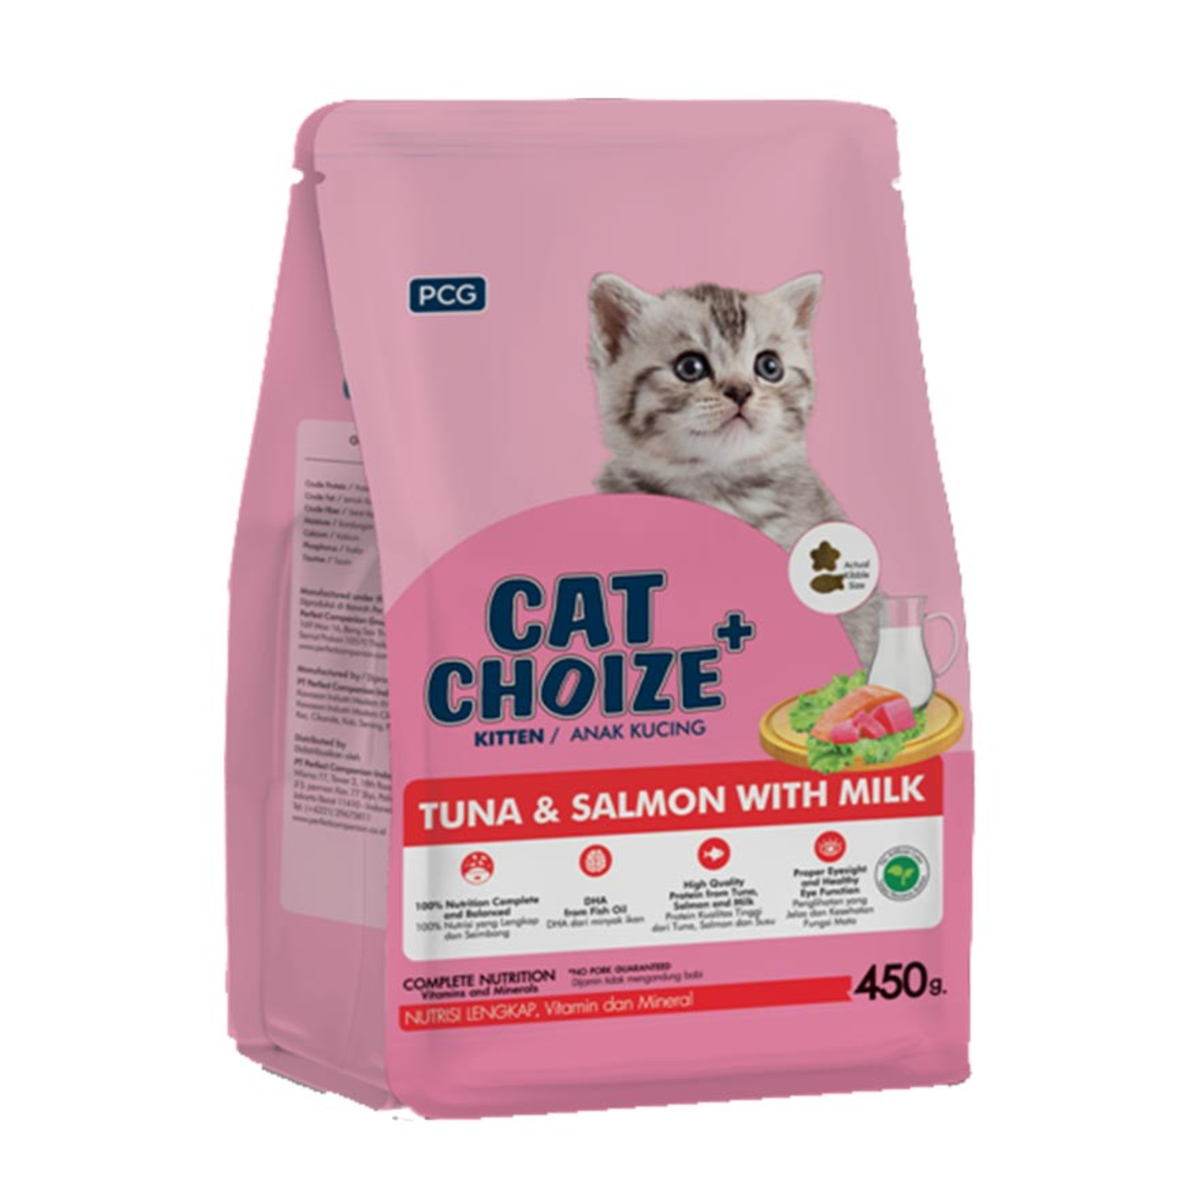 Cat Choize Kitten Food Tuna & Salmon with Milk 450g